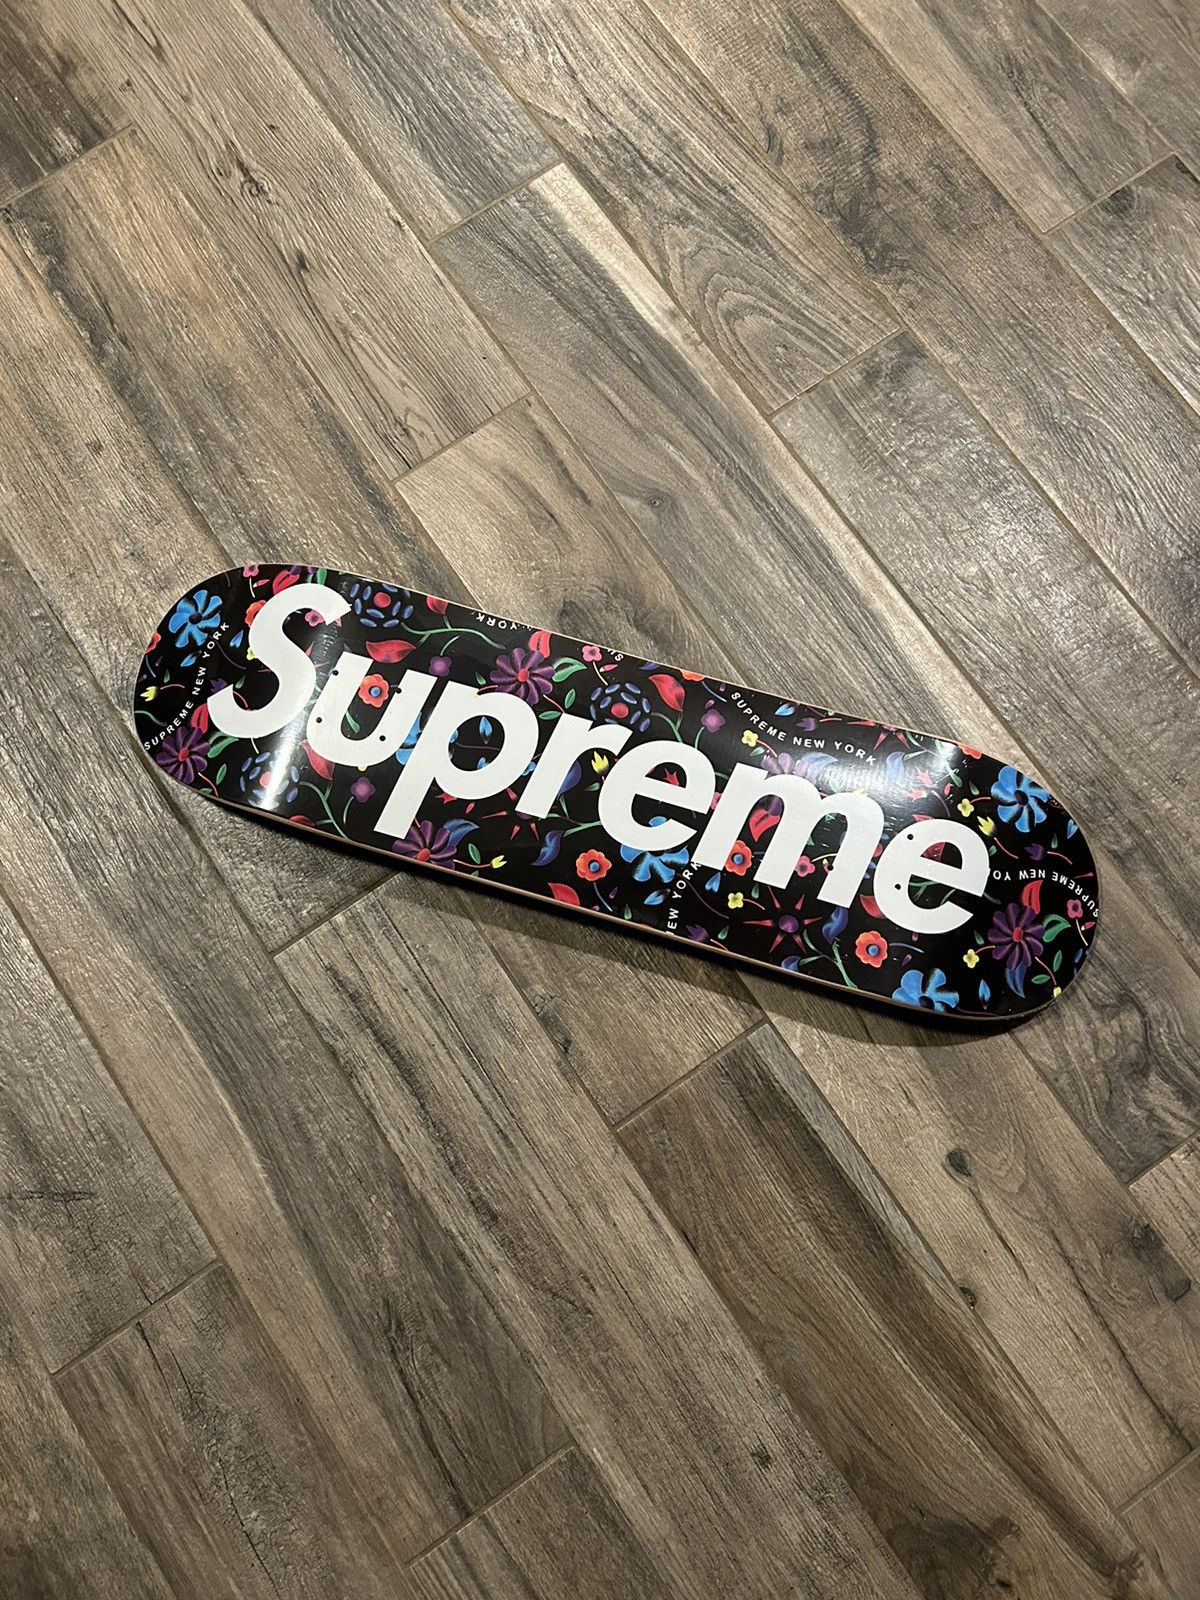 Supreme Supreme SS19 Airbrushed Floral Skateboard Deck | Grailed